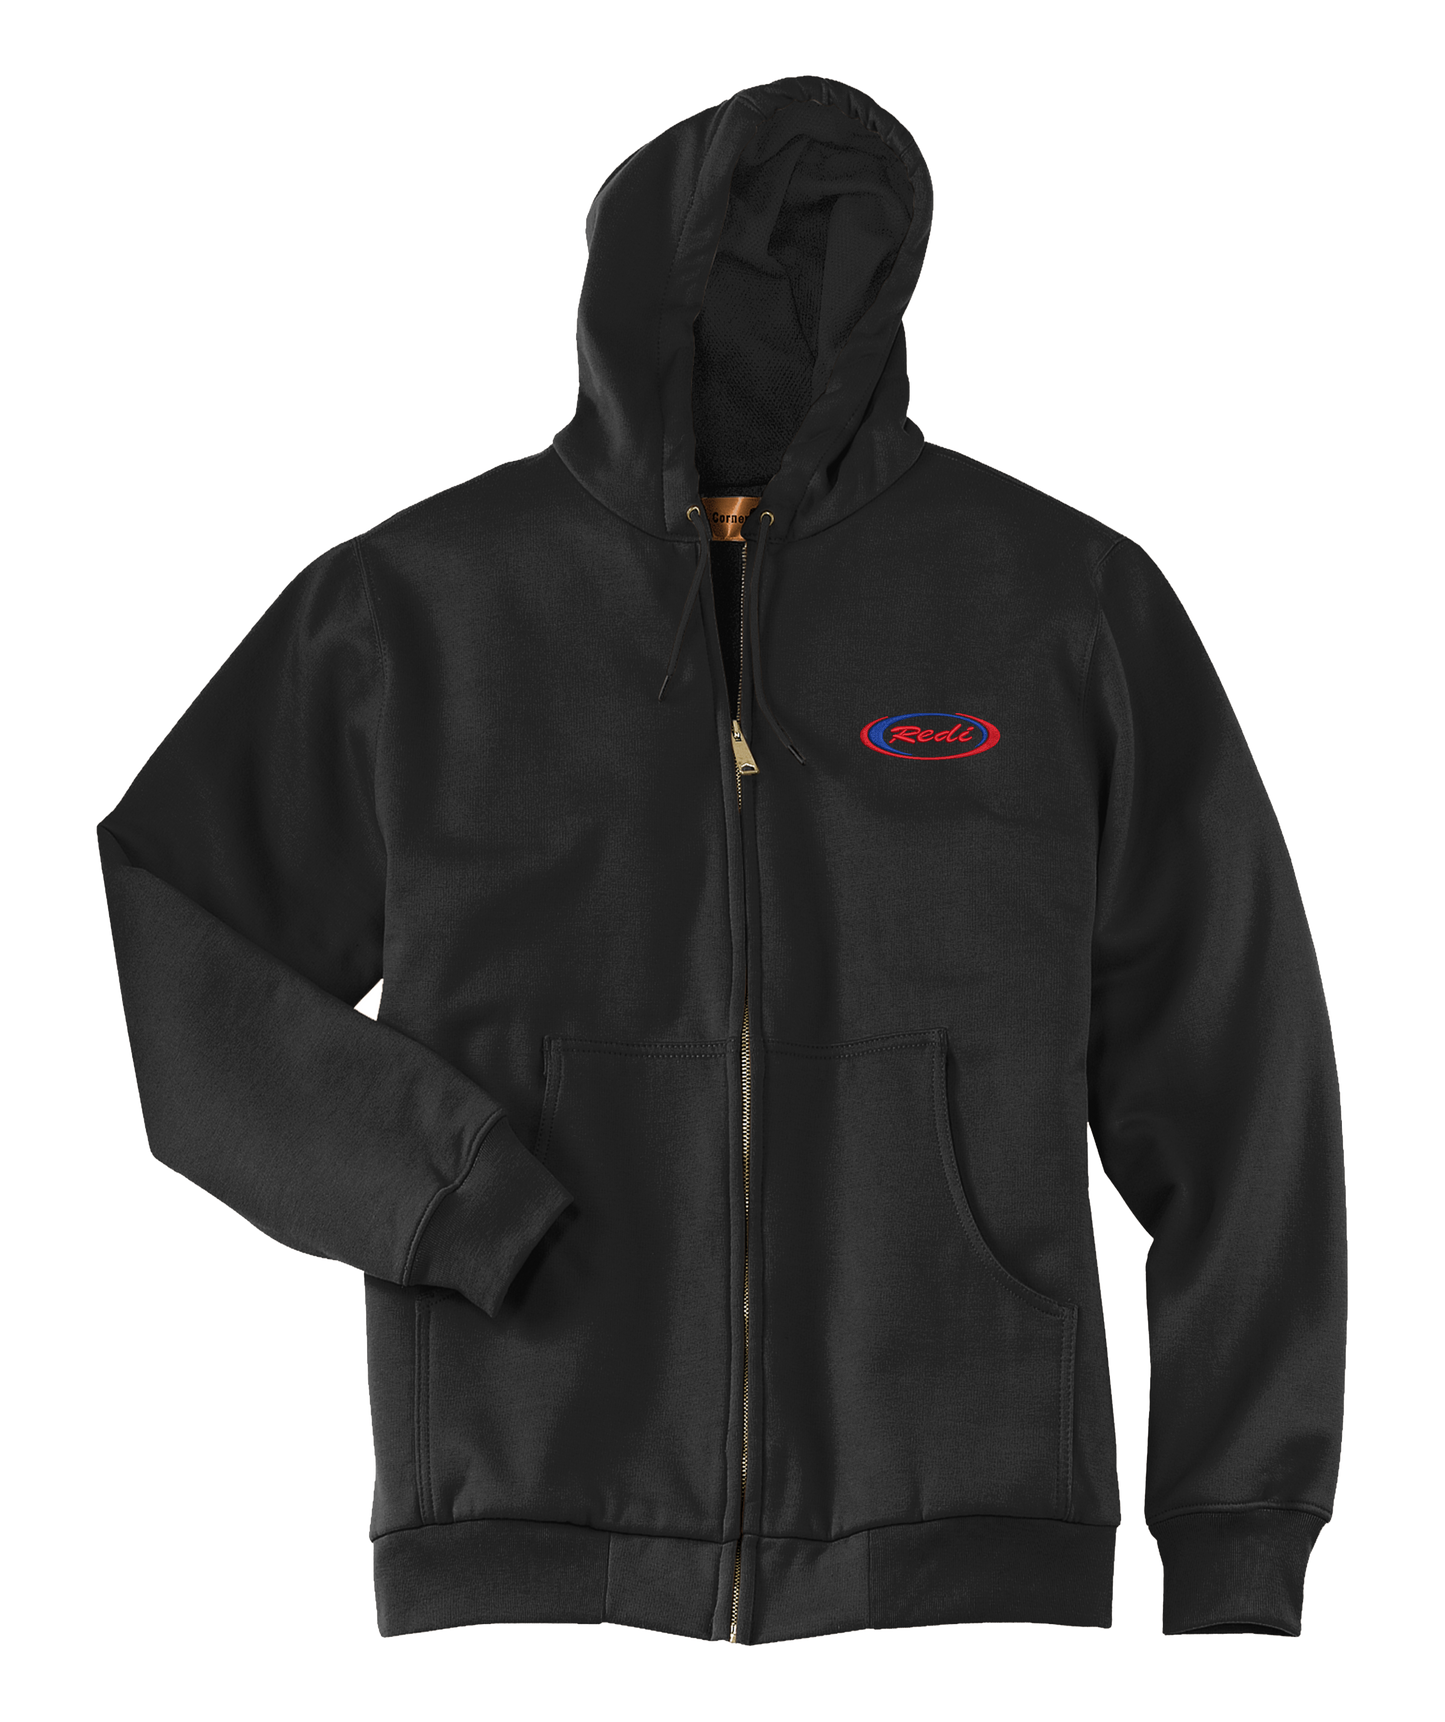 CornerStone® Heavyweight Full-Zip Hooded Sweatshirt with Thermal Lining